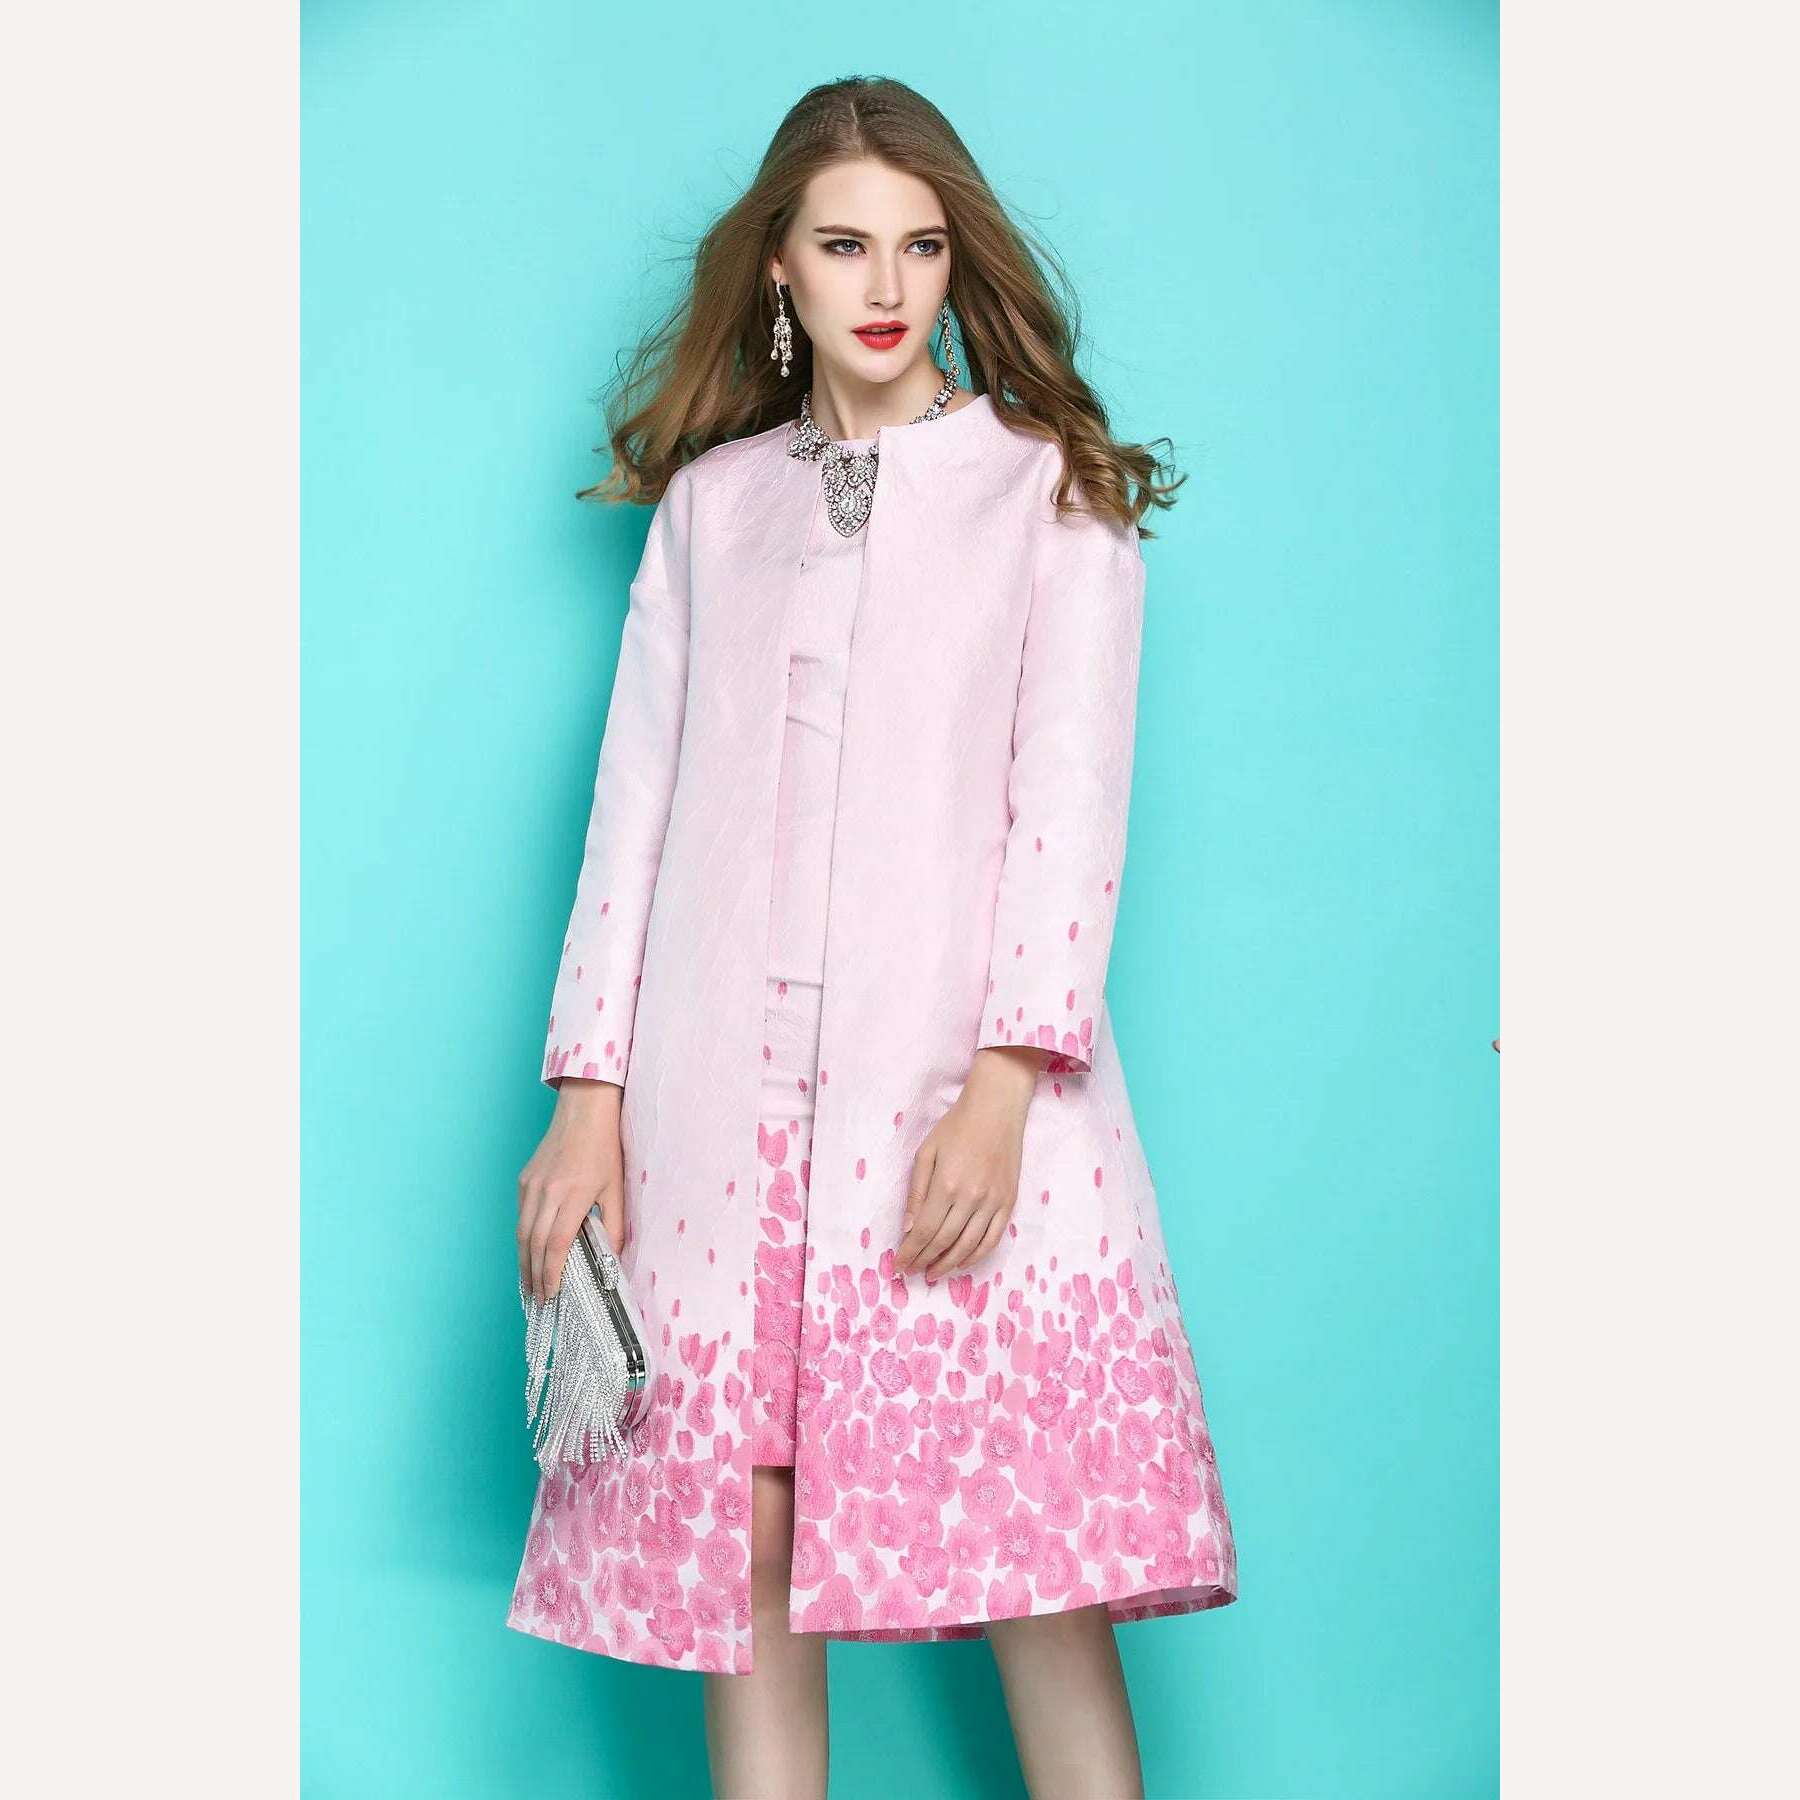 KIMLUD, New Spring Autumn OL Ladies Delicate Pink Flower Jacquard Long Trench Coat Slim Overcoat + Tank Dress Fashion Women Dress Suit, KIMLUD Women's Clothes